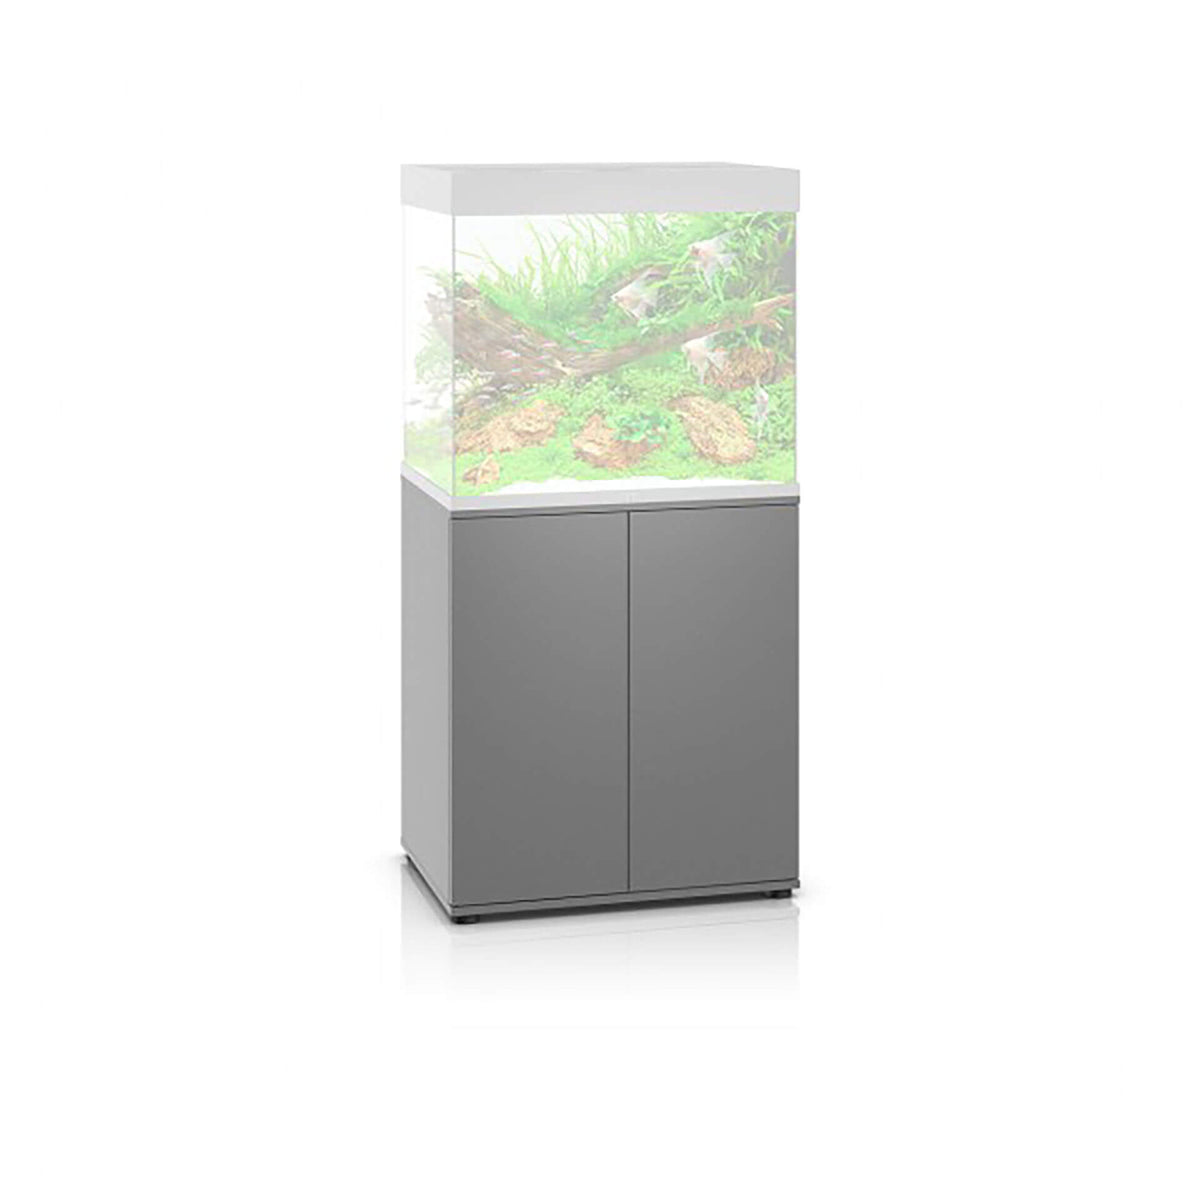 Juwel Lido 200 Cabinet Stand Grey - 71 x 51 x 80cm